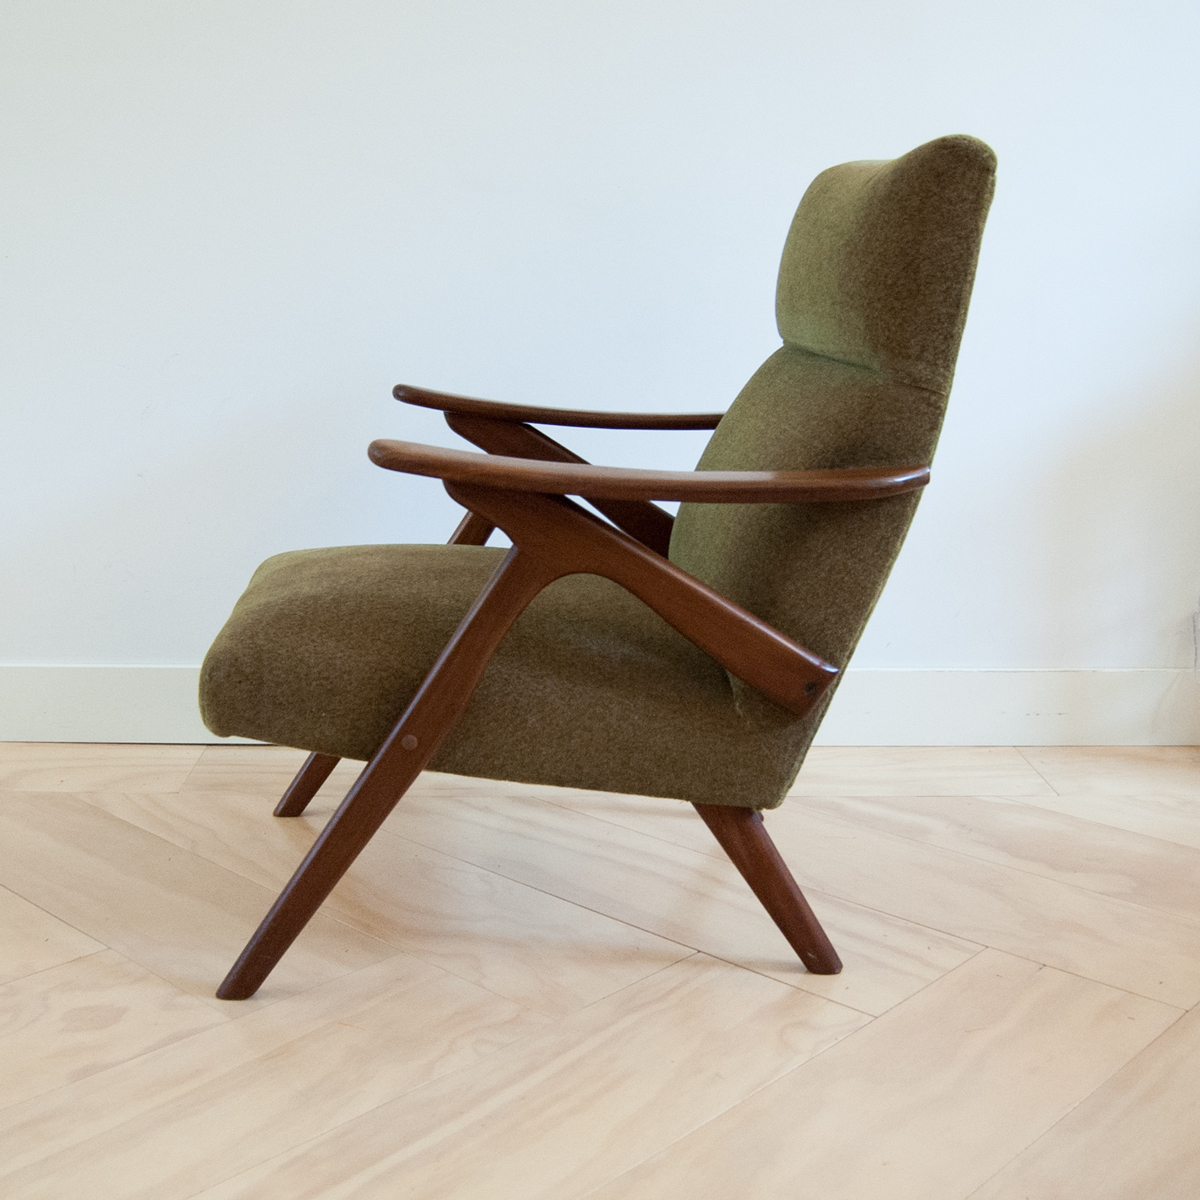 VIntage Deense fauteuil